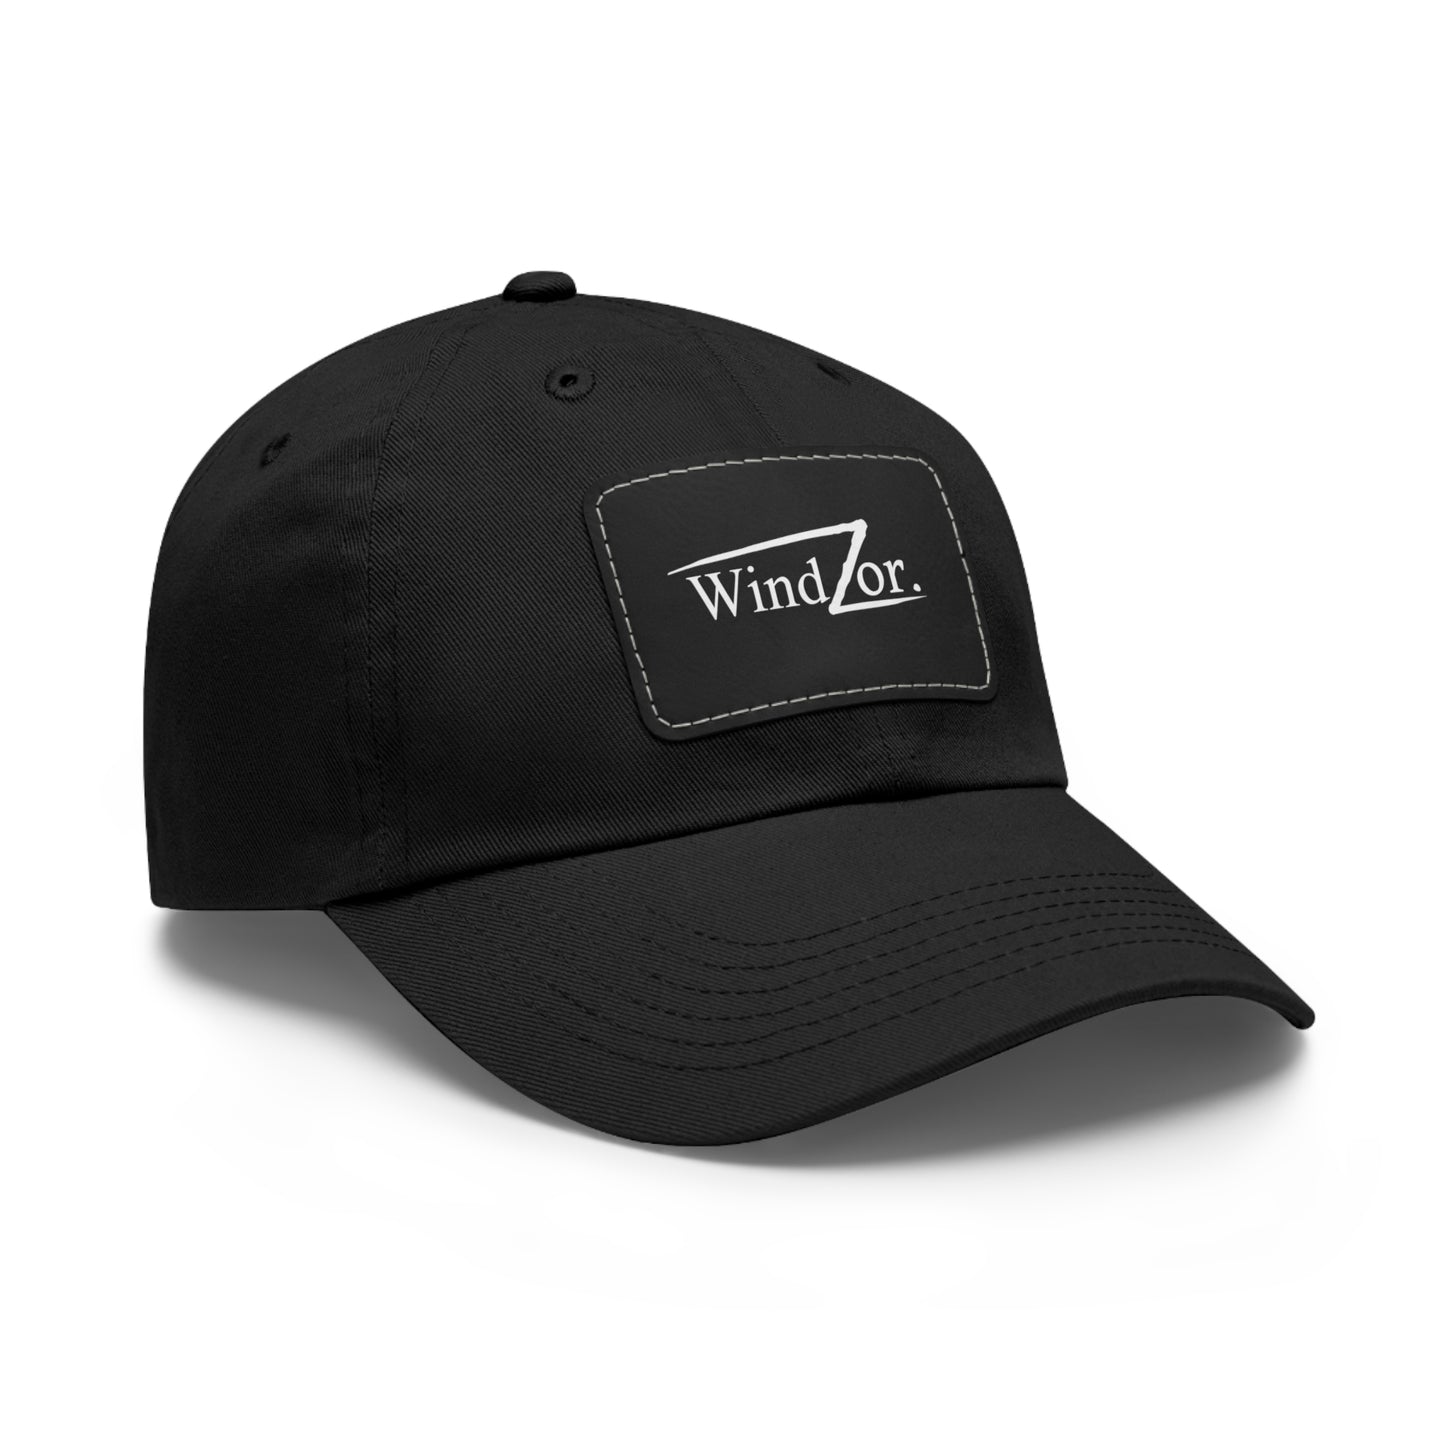 Wondzor Daddy Hat